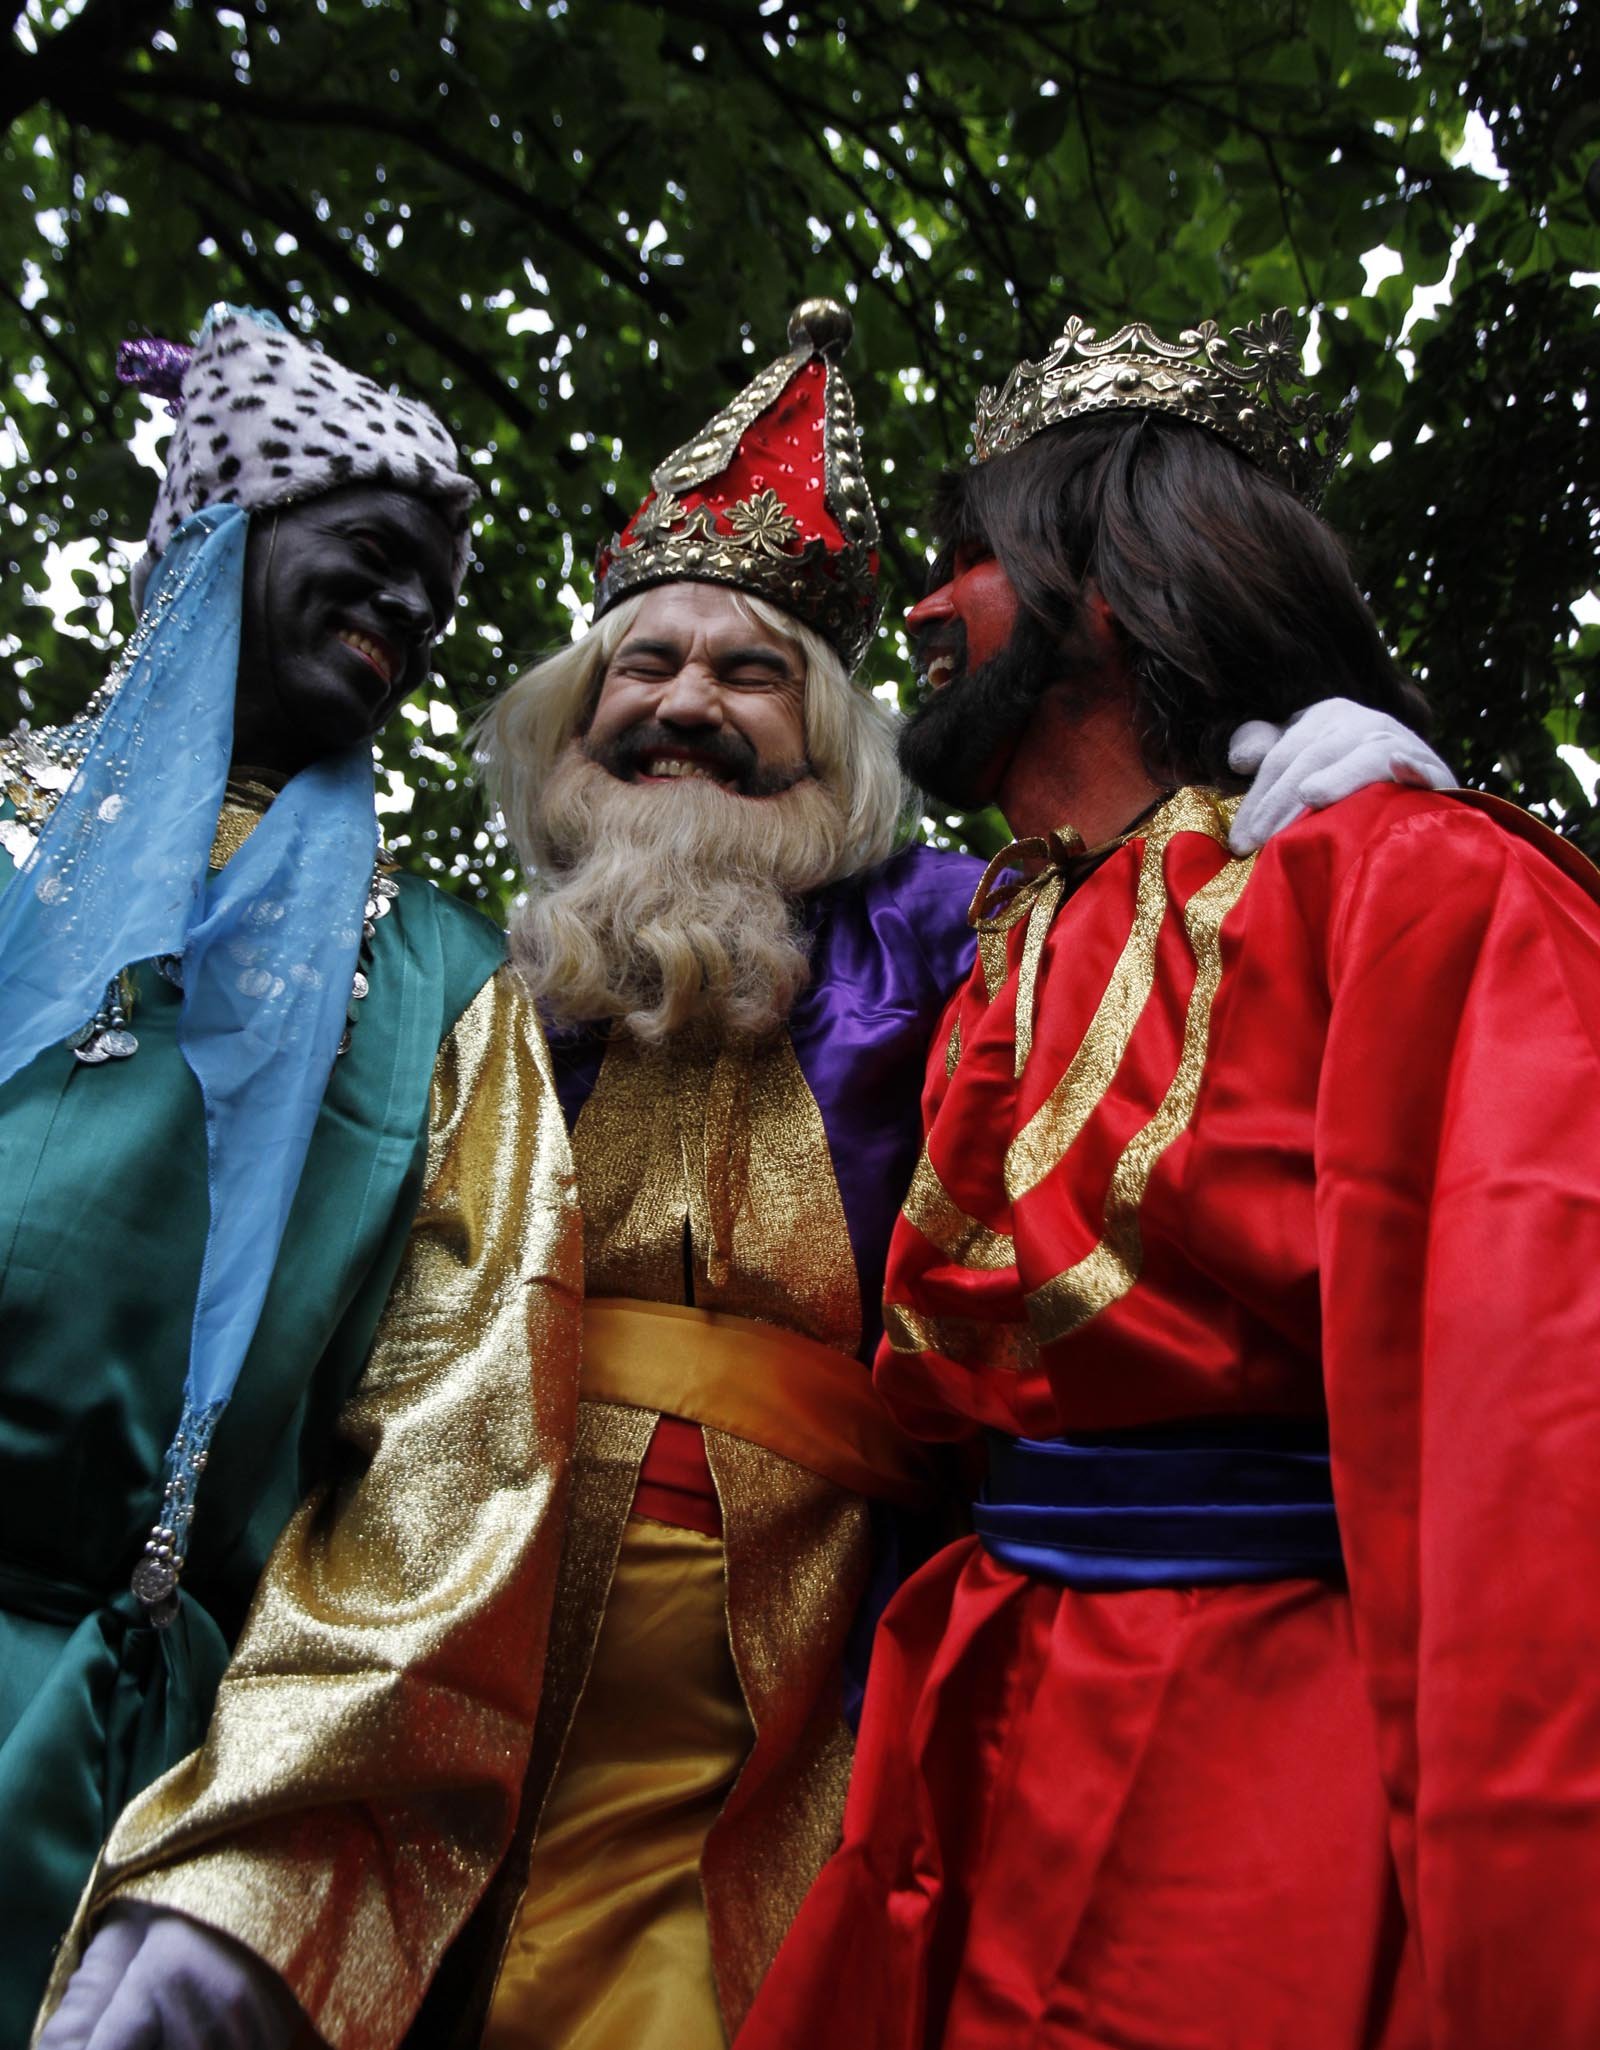 Feast of Three Kings ends Christmas season